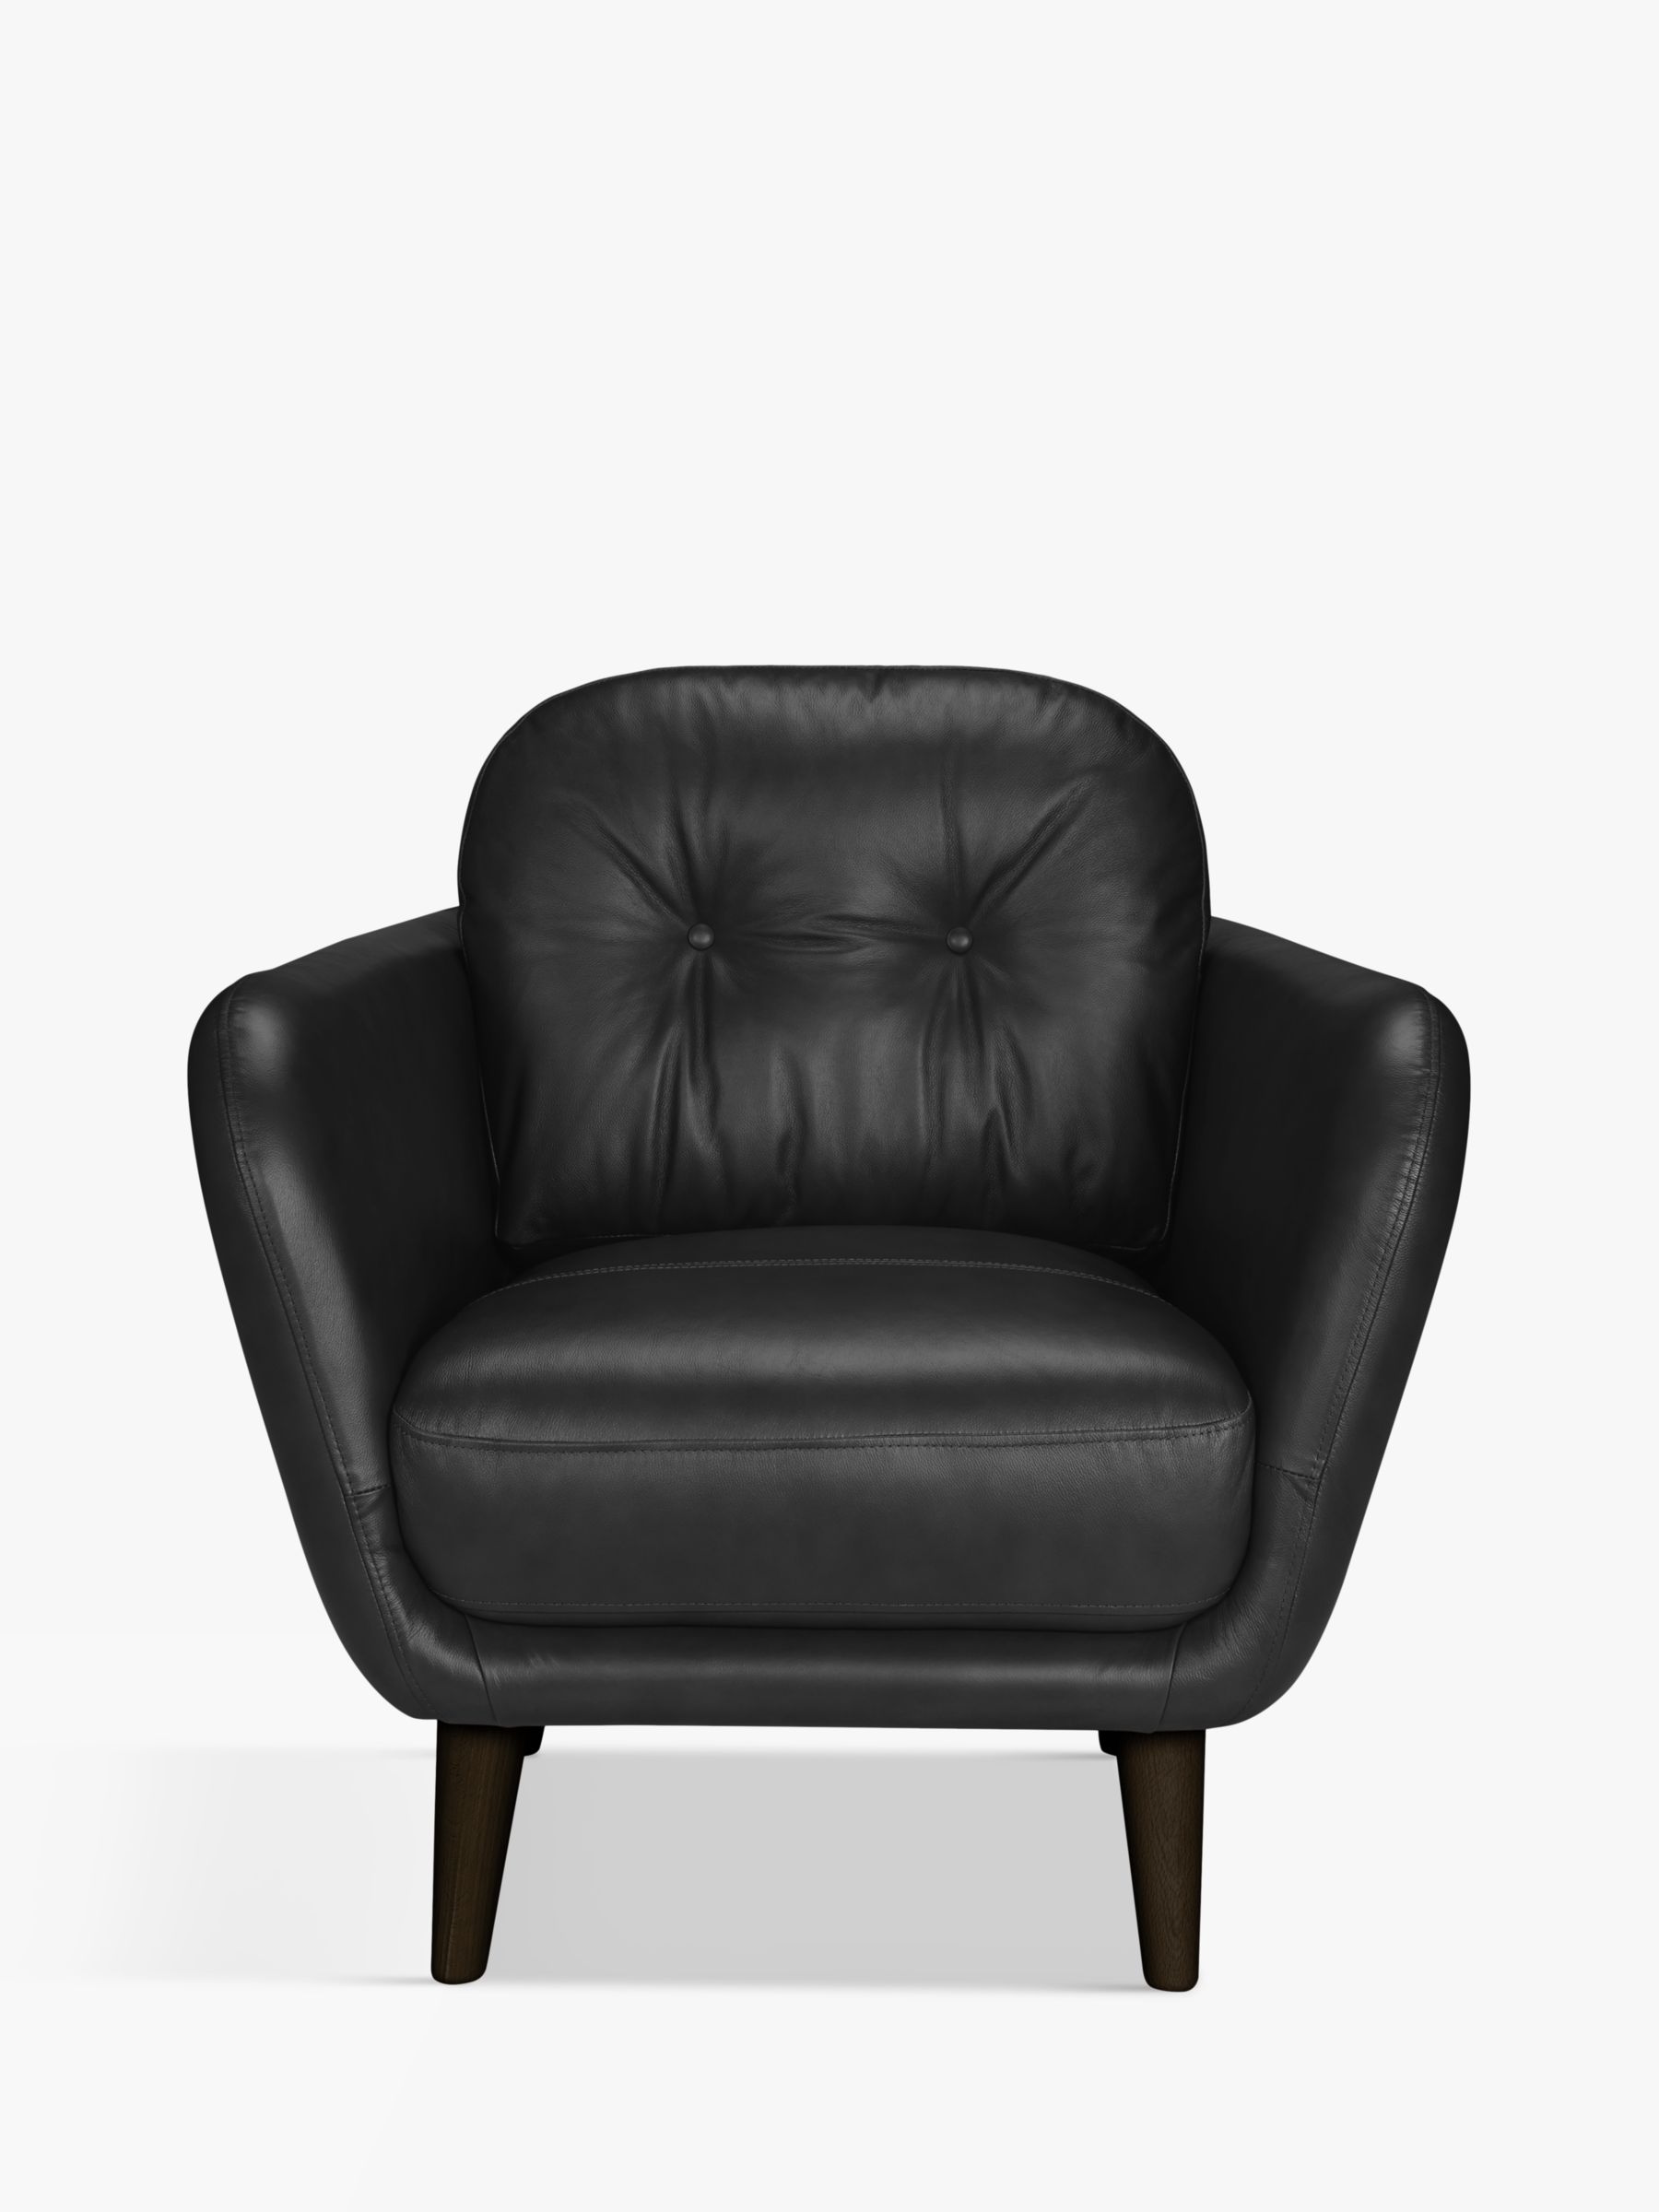 Arlo Range, John Lewis Arlo Leather Armchair, Dark Leg, Contempo Black